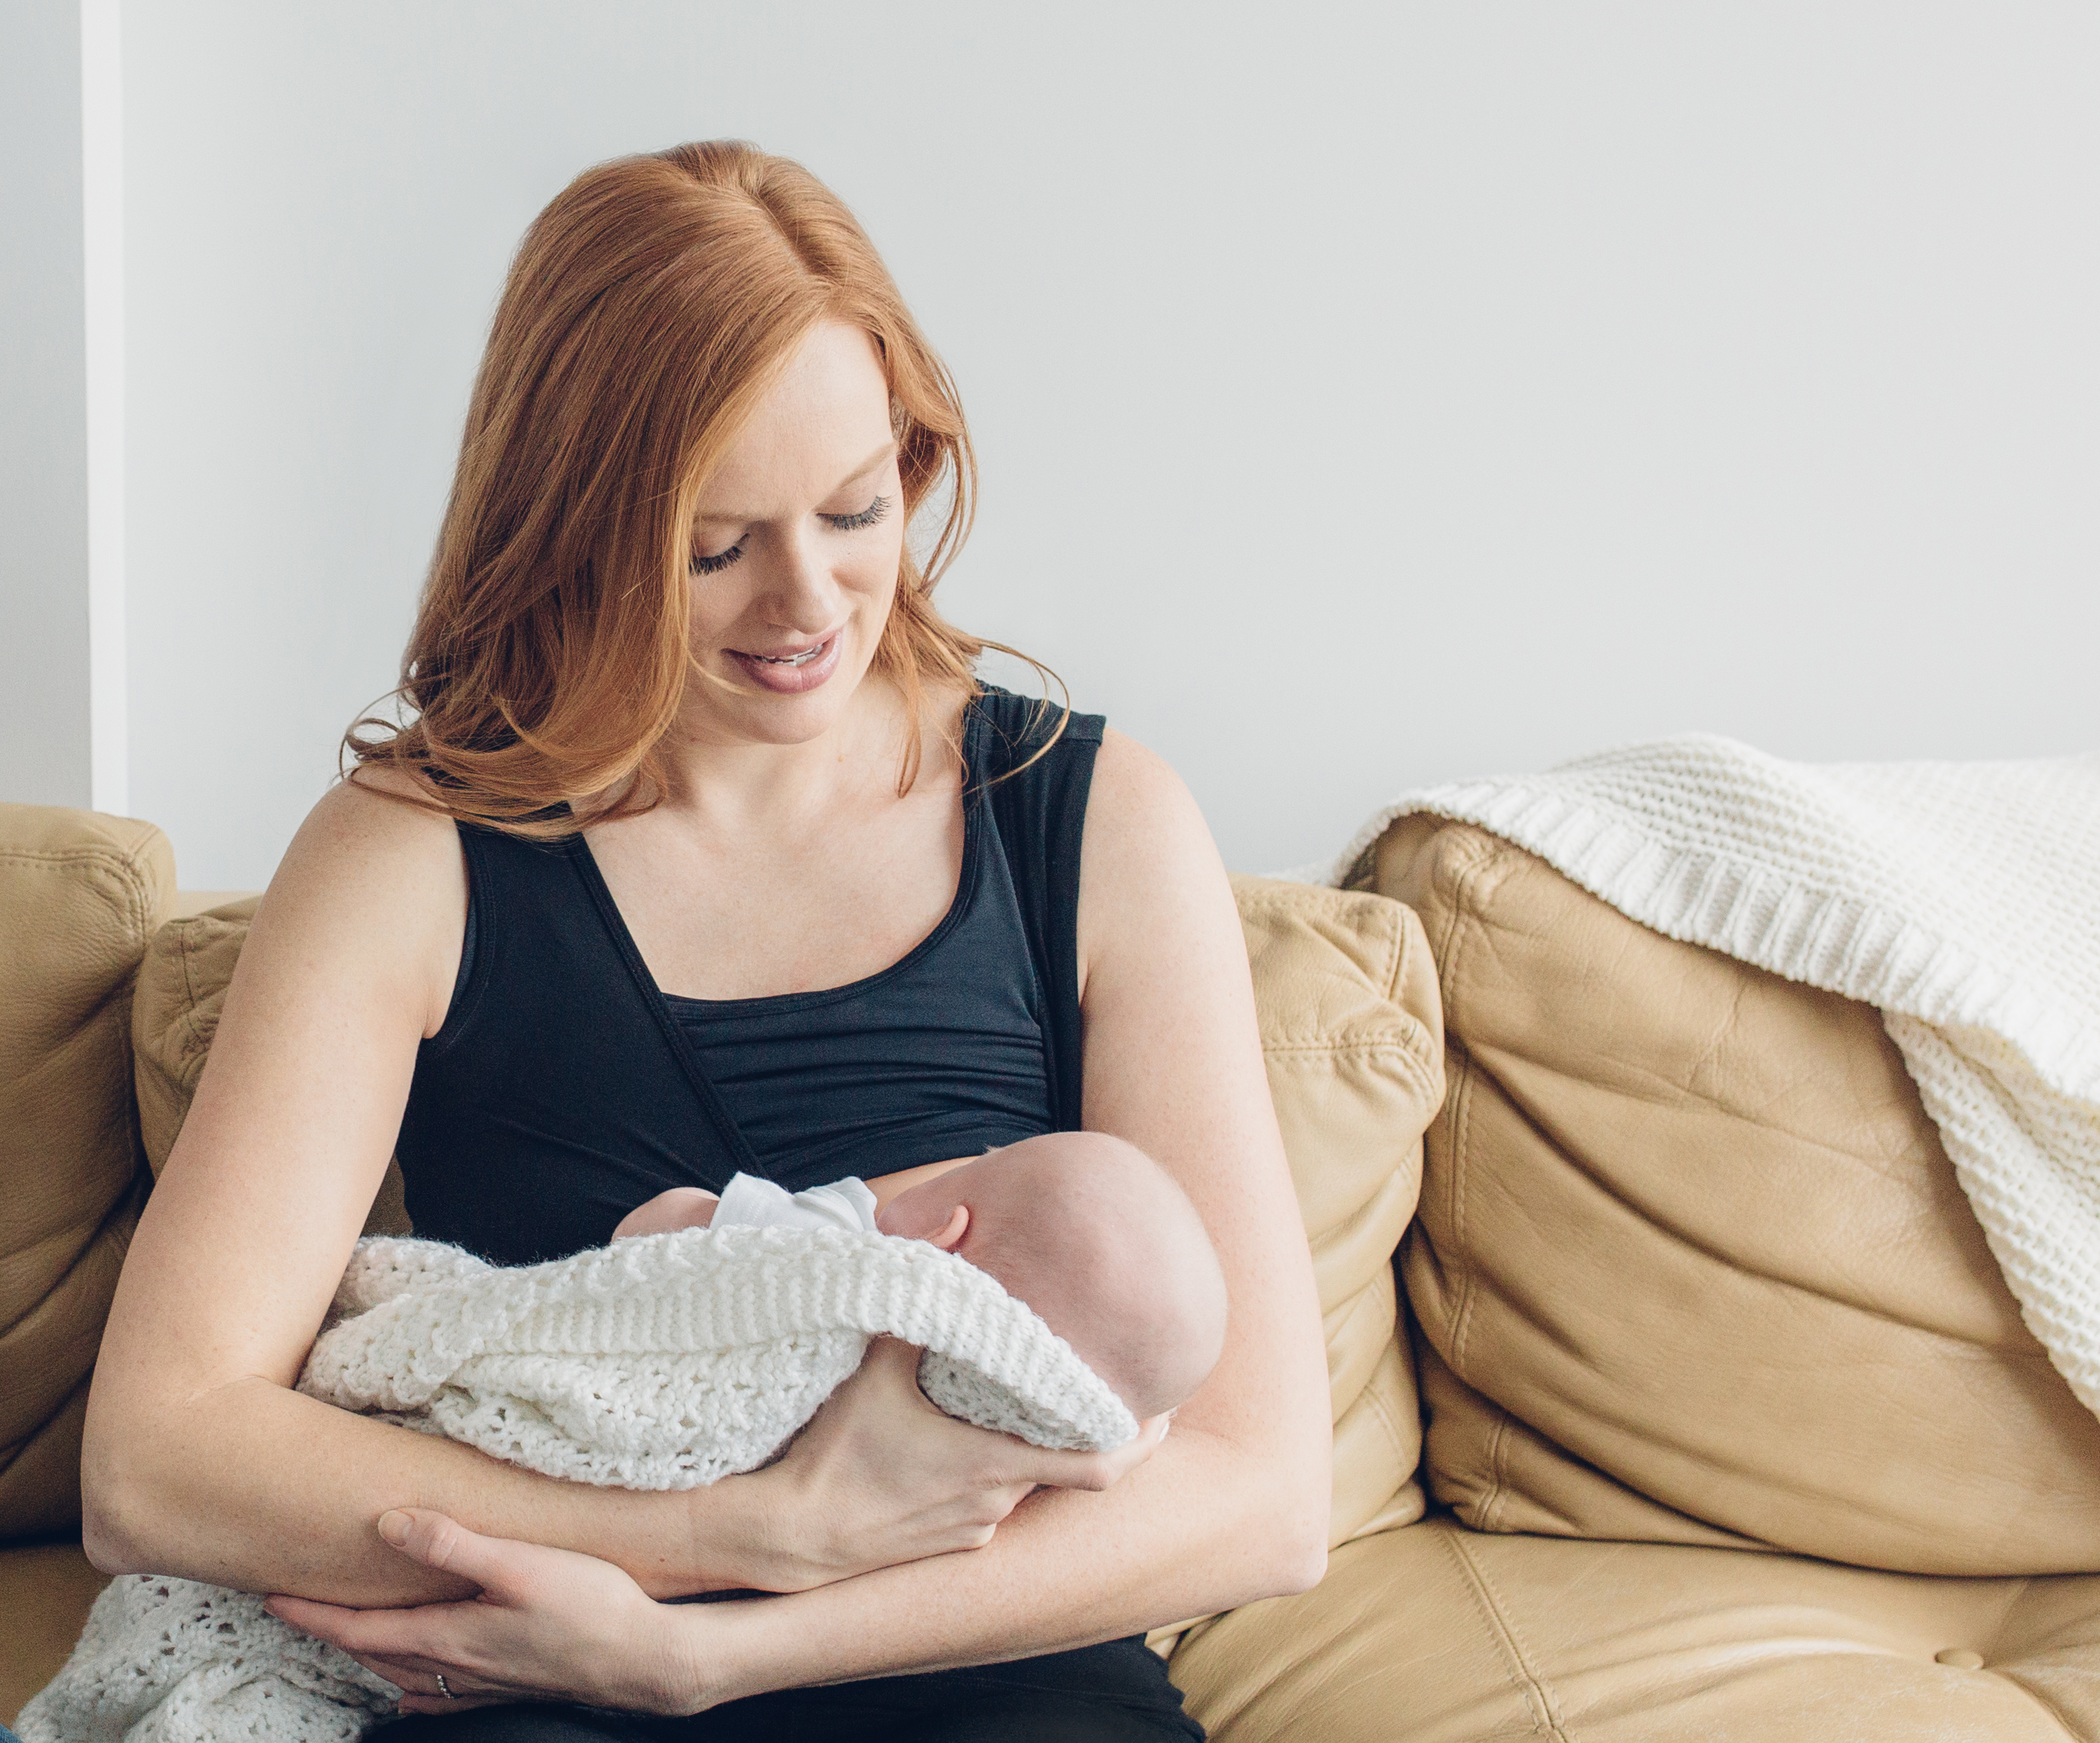 The Best Breastfeeding Gear for Moms